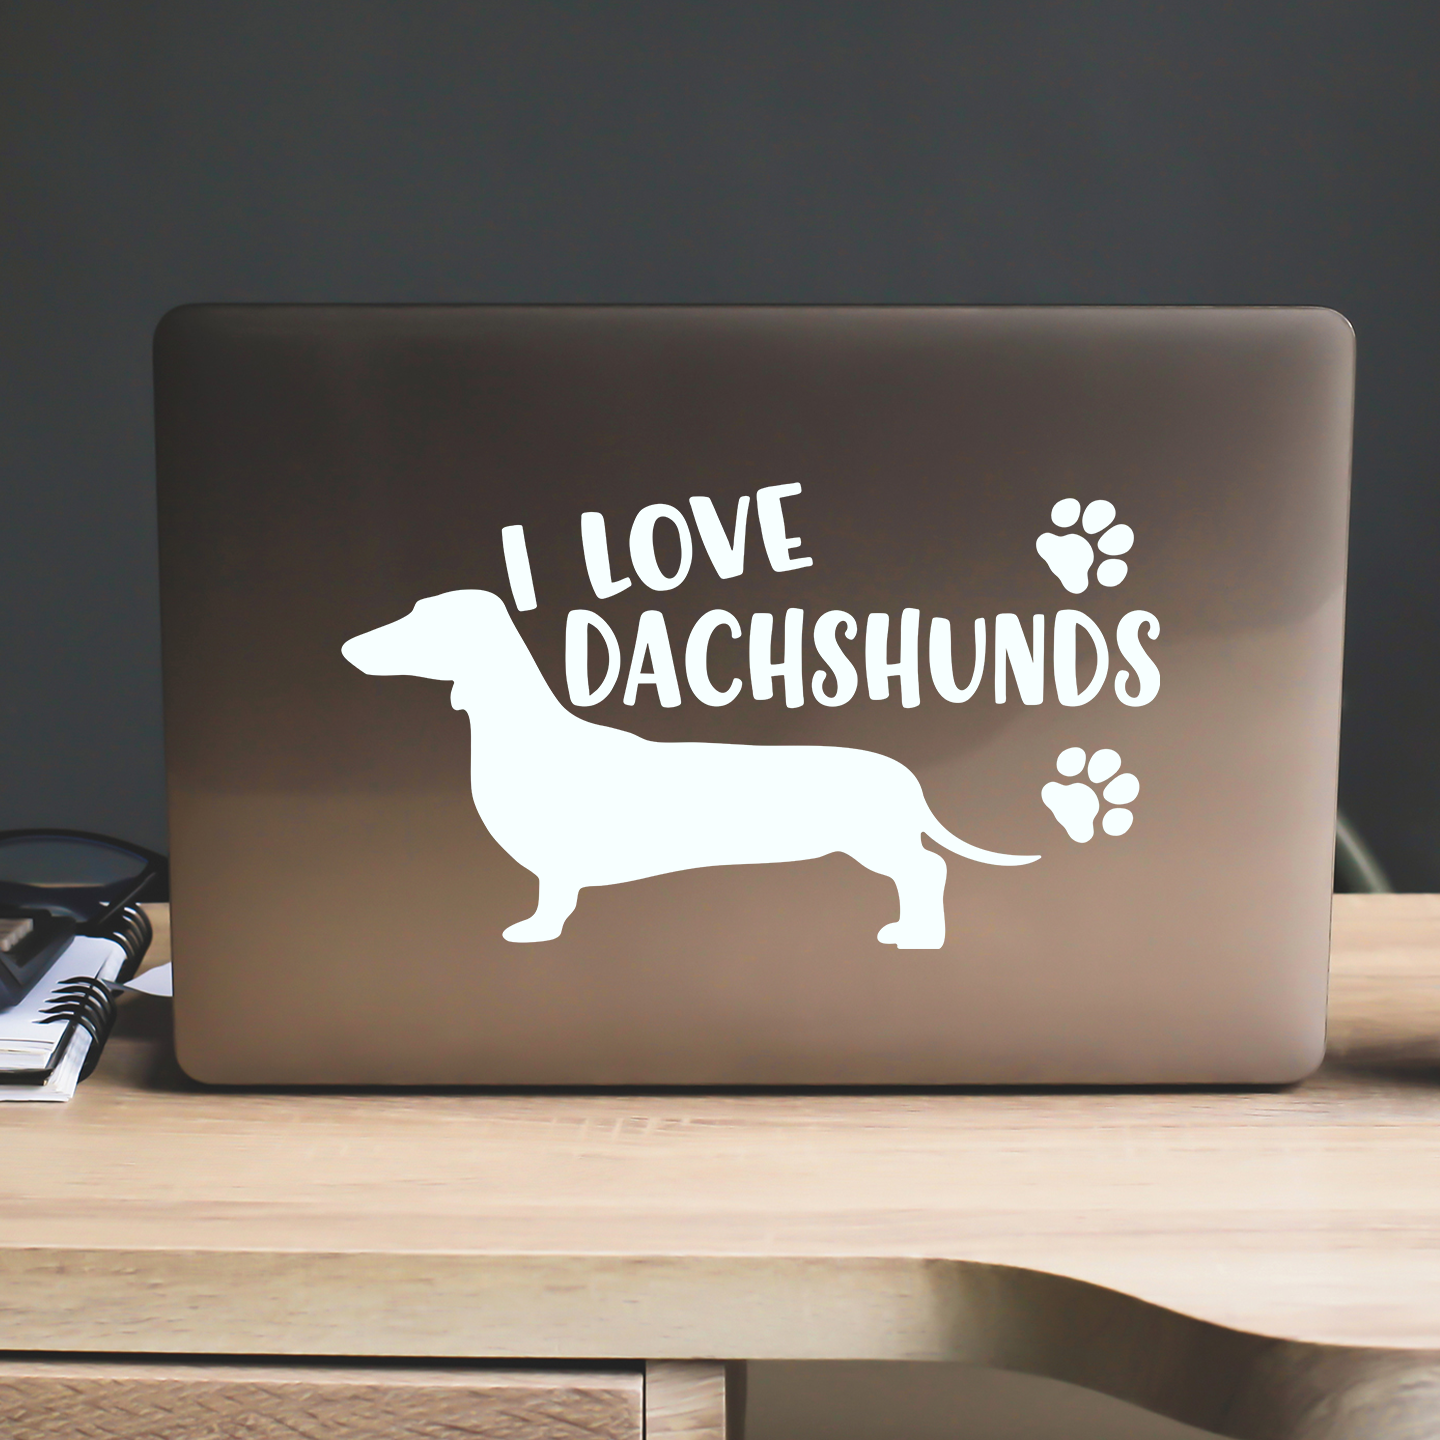 I Love Dachshunds Sticker